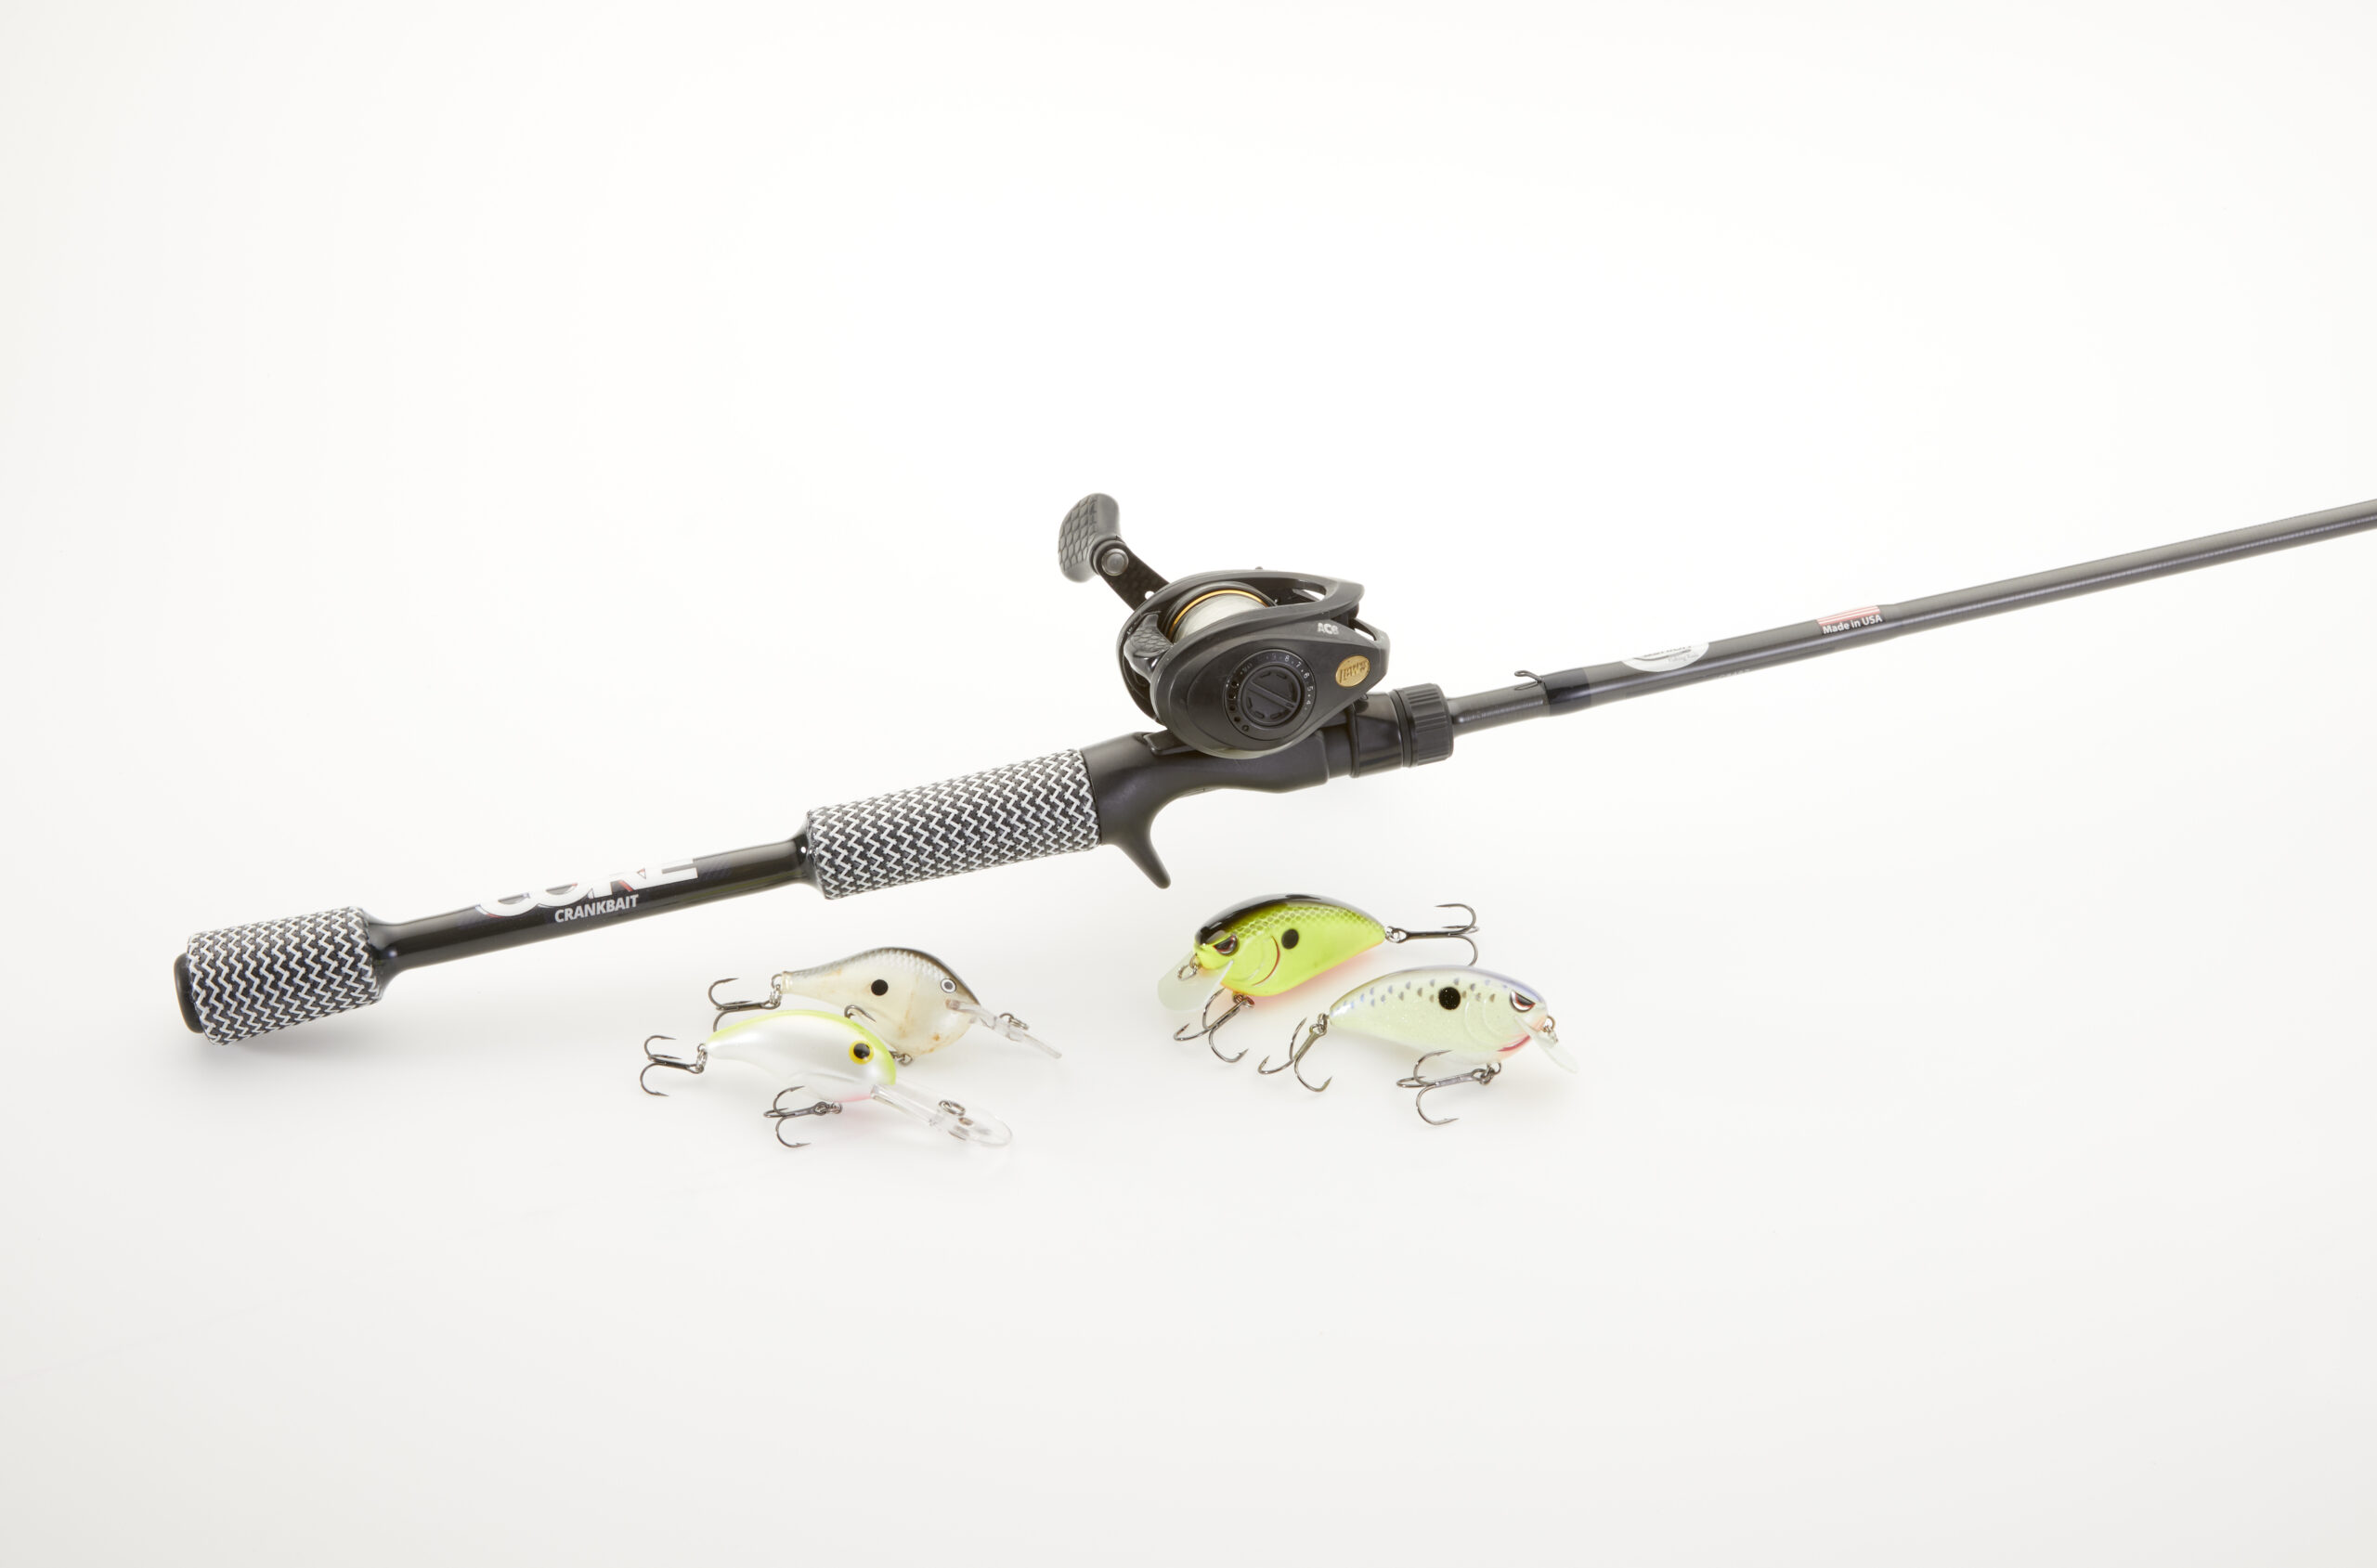 Cashion Fishing Rods - ICON Multi Purpose - 7'4 gjutning - iMP74MHMF -  FISH307.com